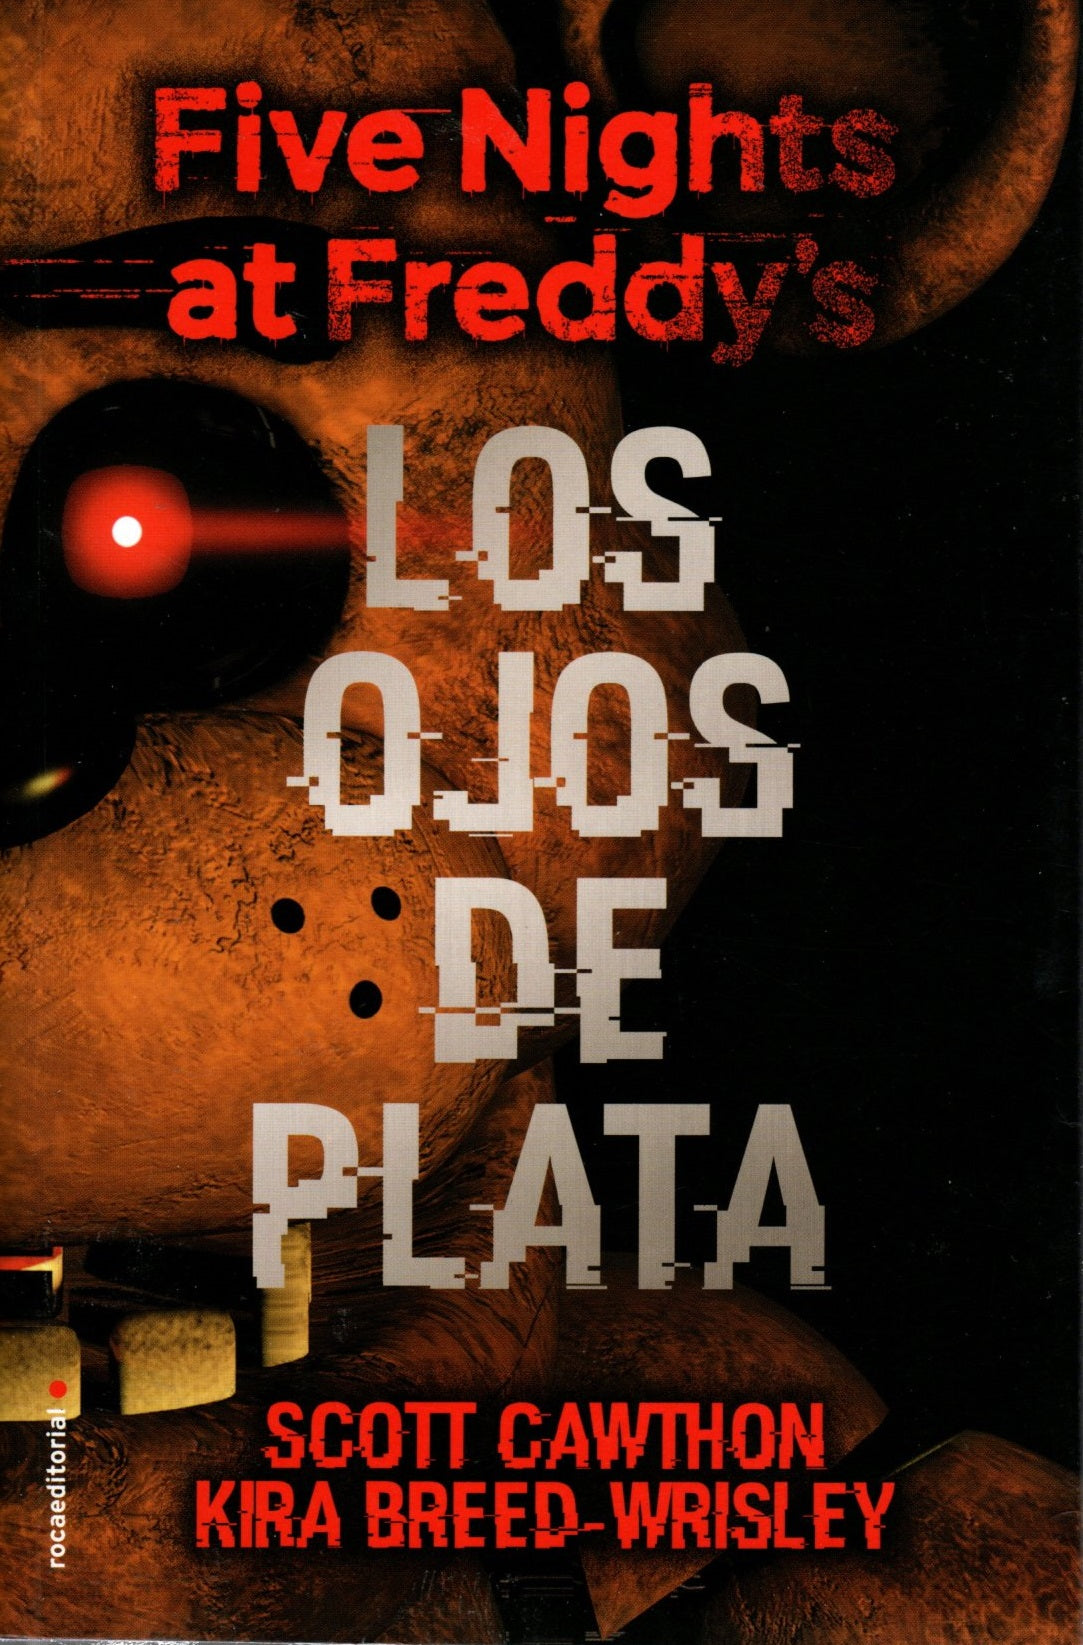 Libro Kira Wrisley-Breed y Scott Cawhton - Five Nights at Freddy's: The Silver Eyes